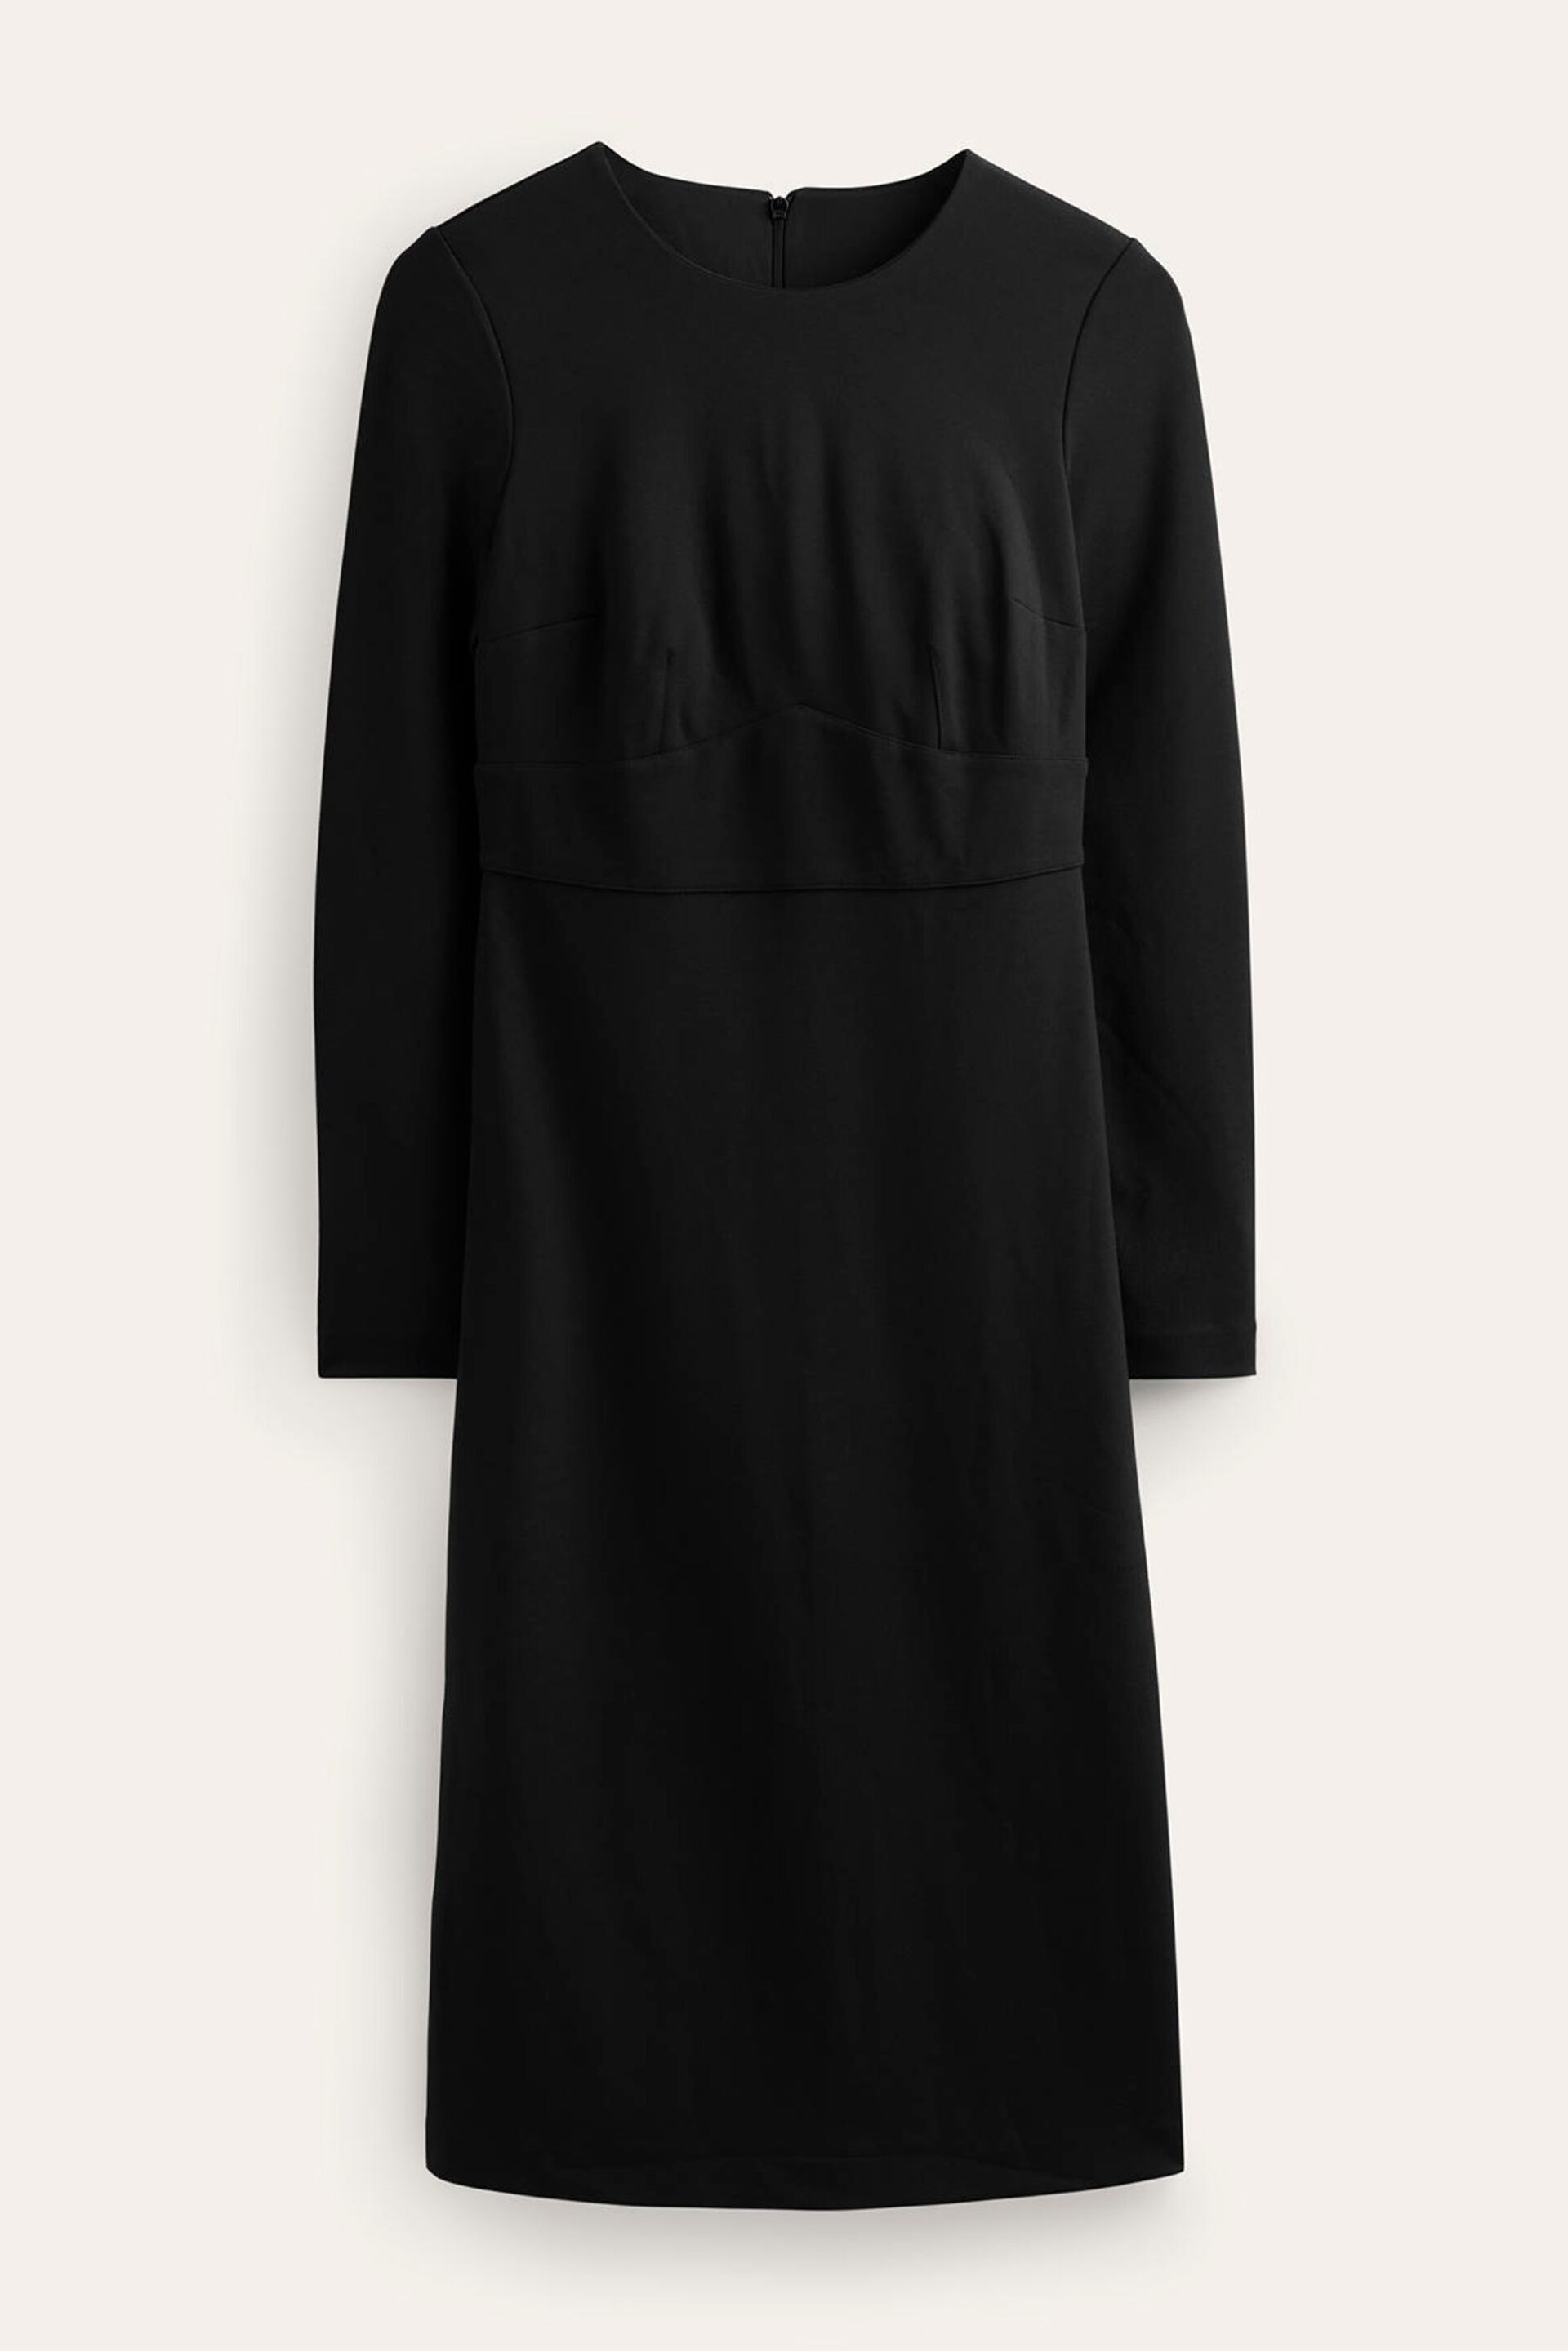 Boden Black Nadia Jersey Midi Dress - Image 5 of 5